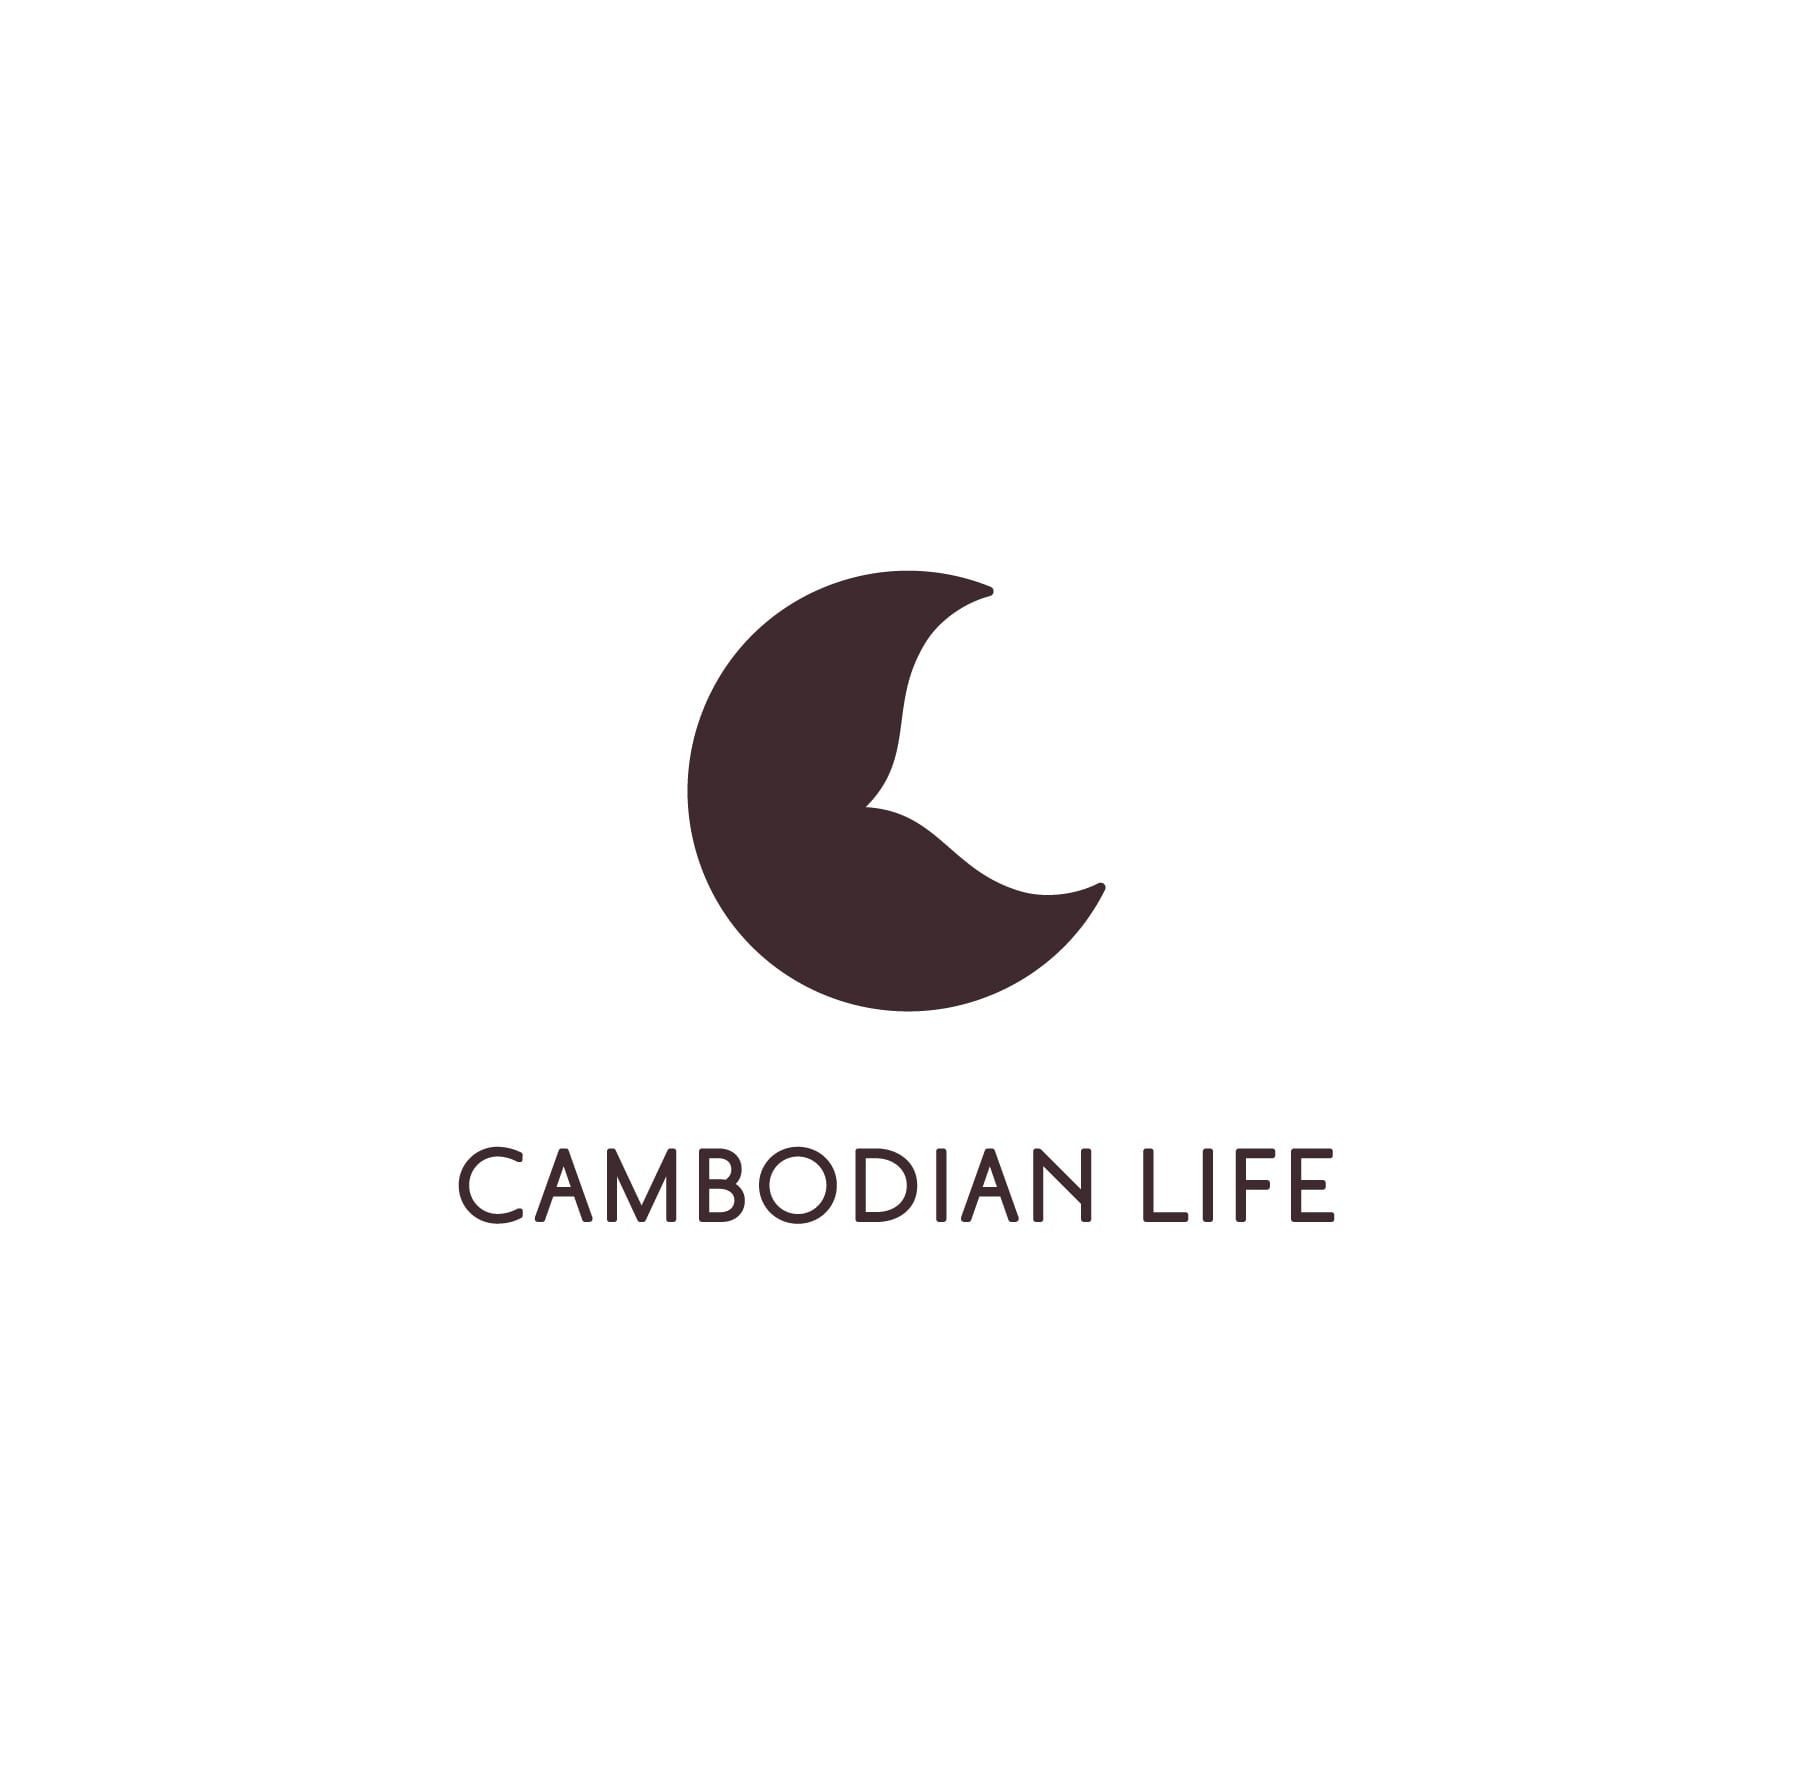 CAMBODIAN LIFE